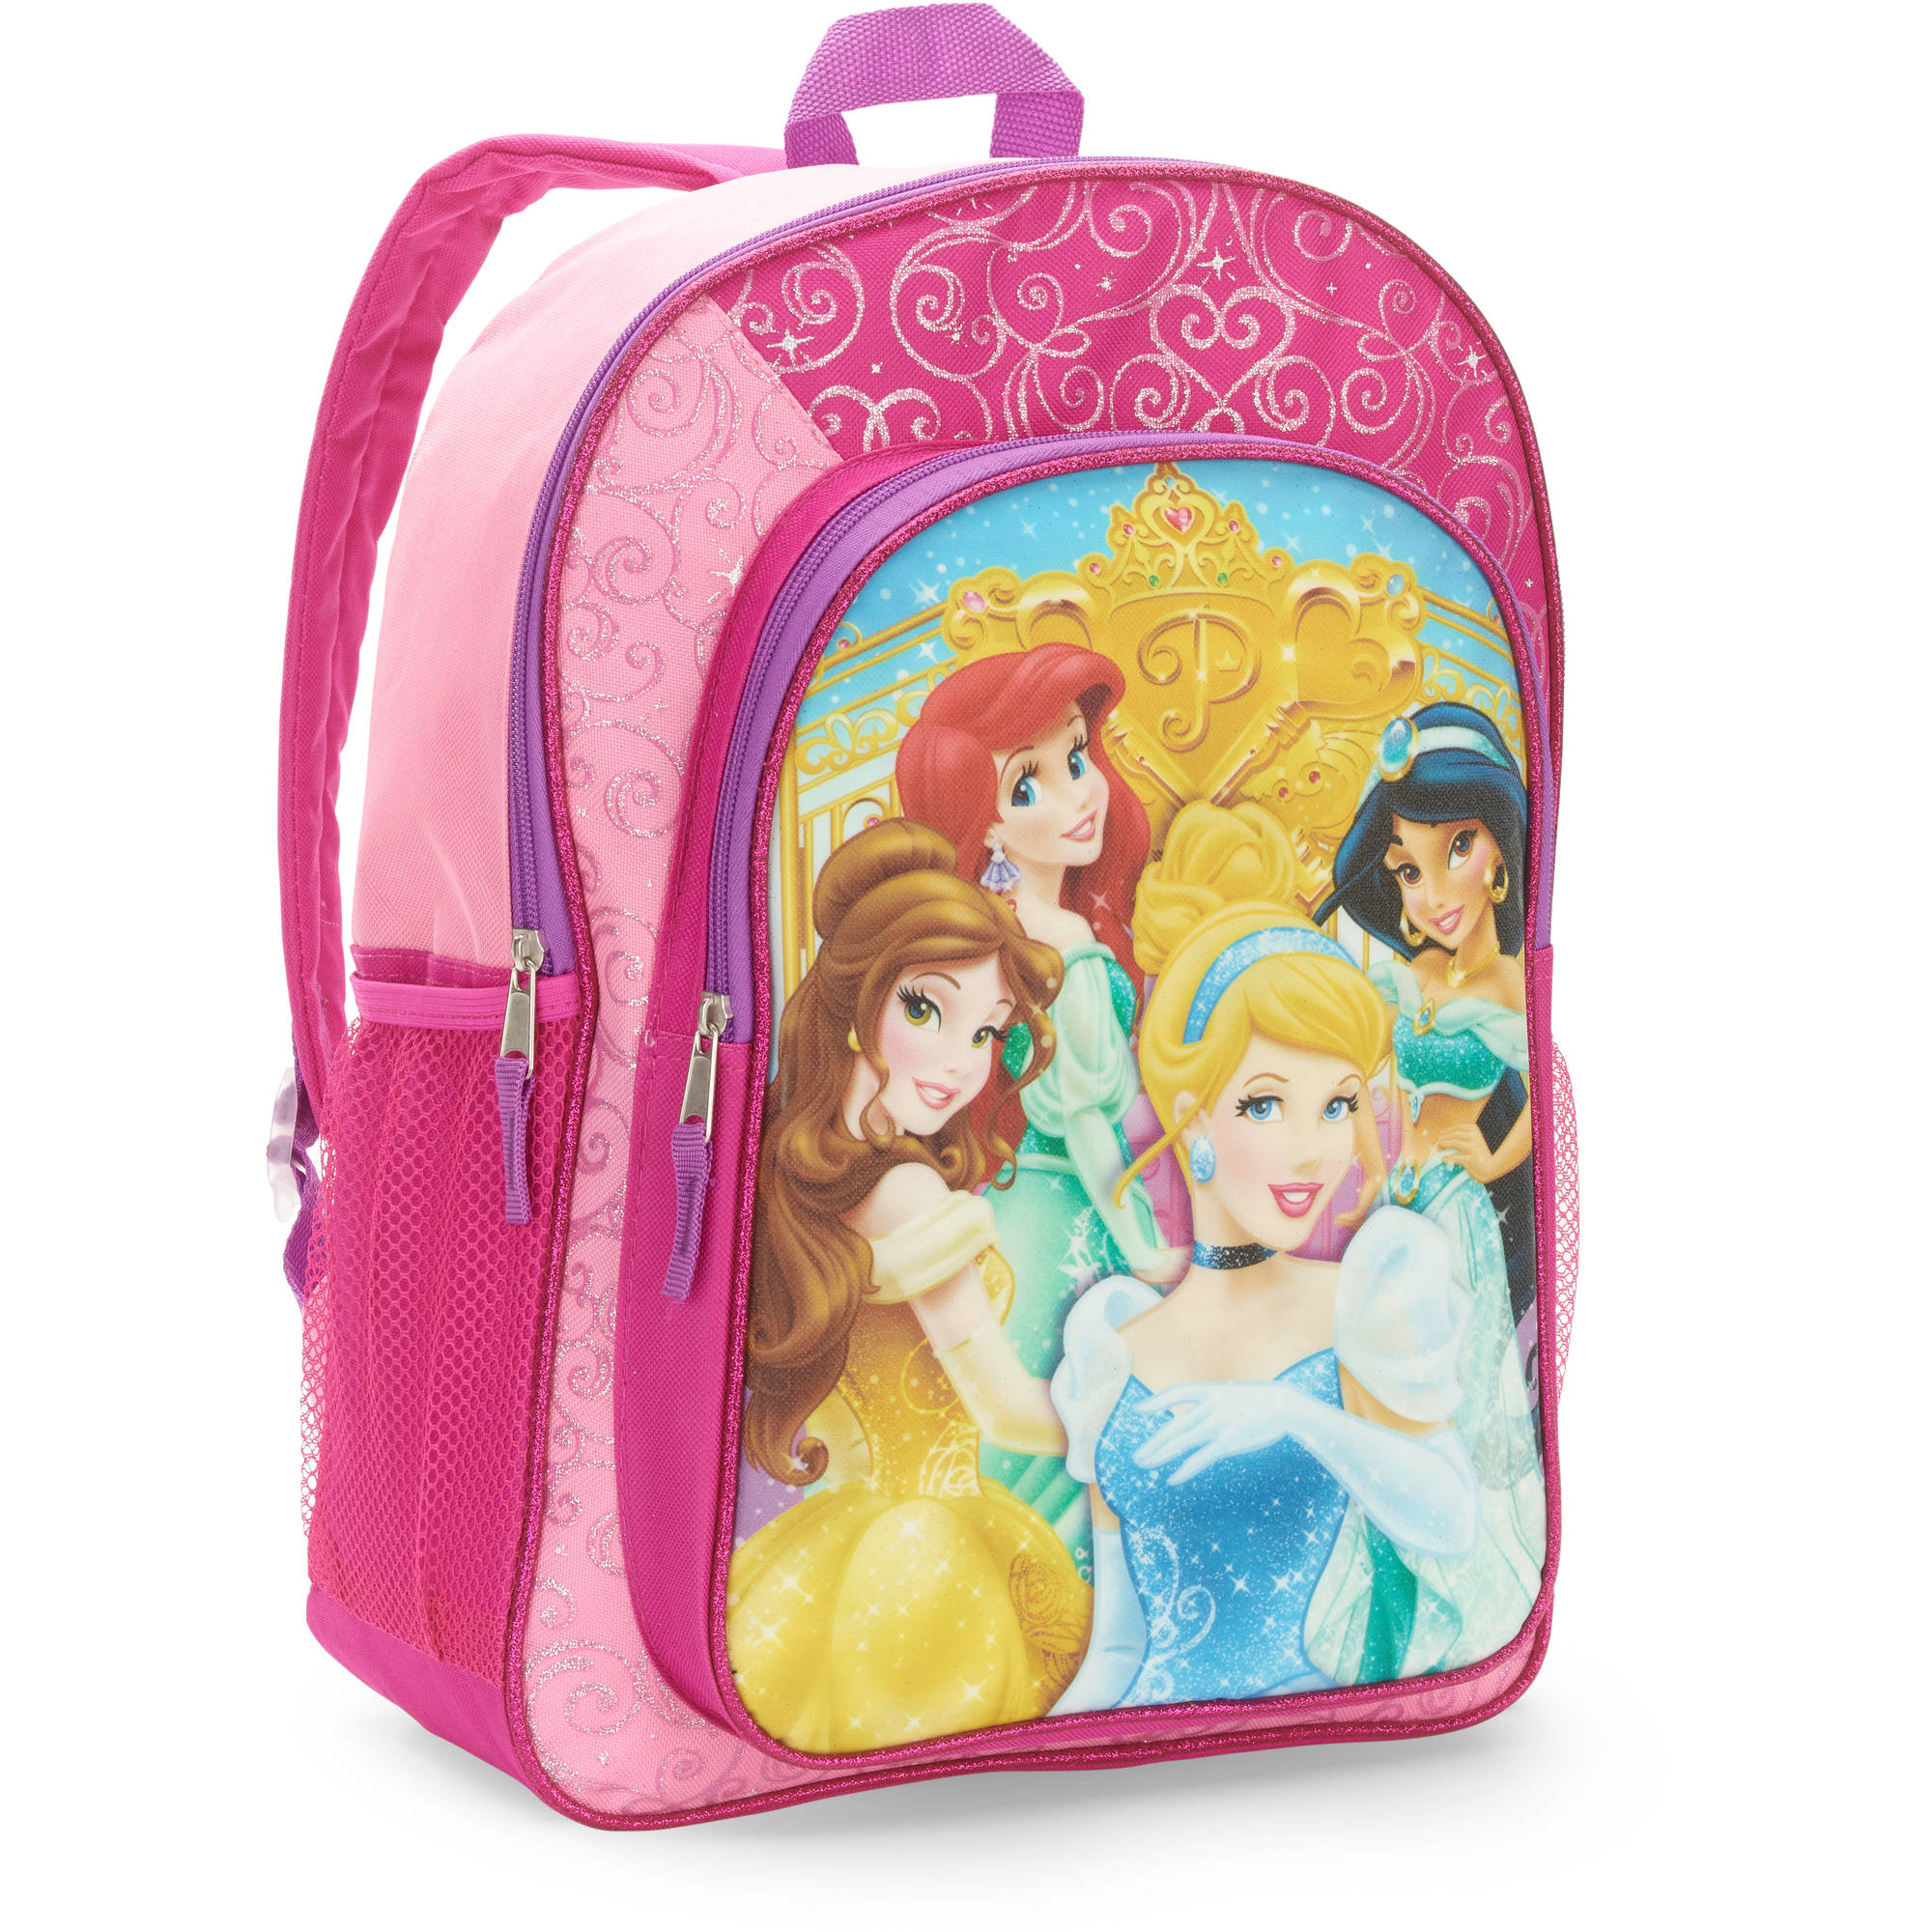 Disney Princess Full Size 16" Backpack - image 1 of 1